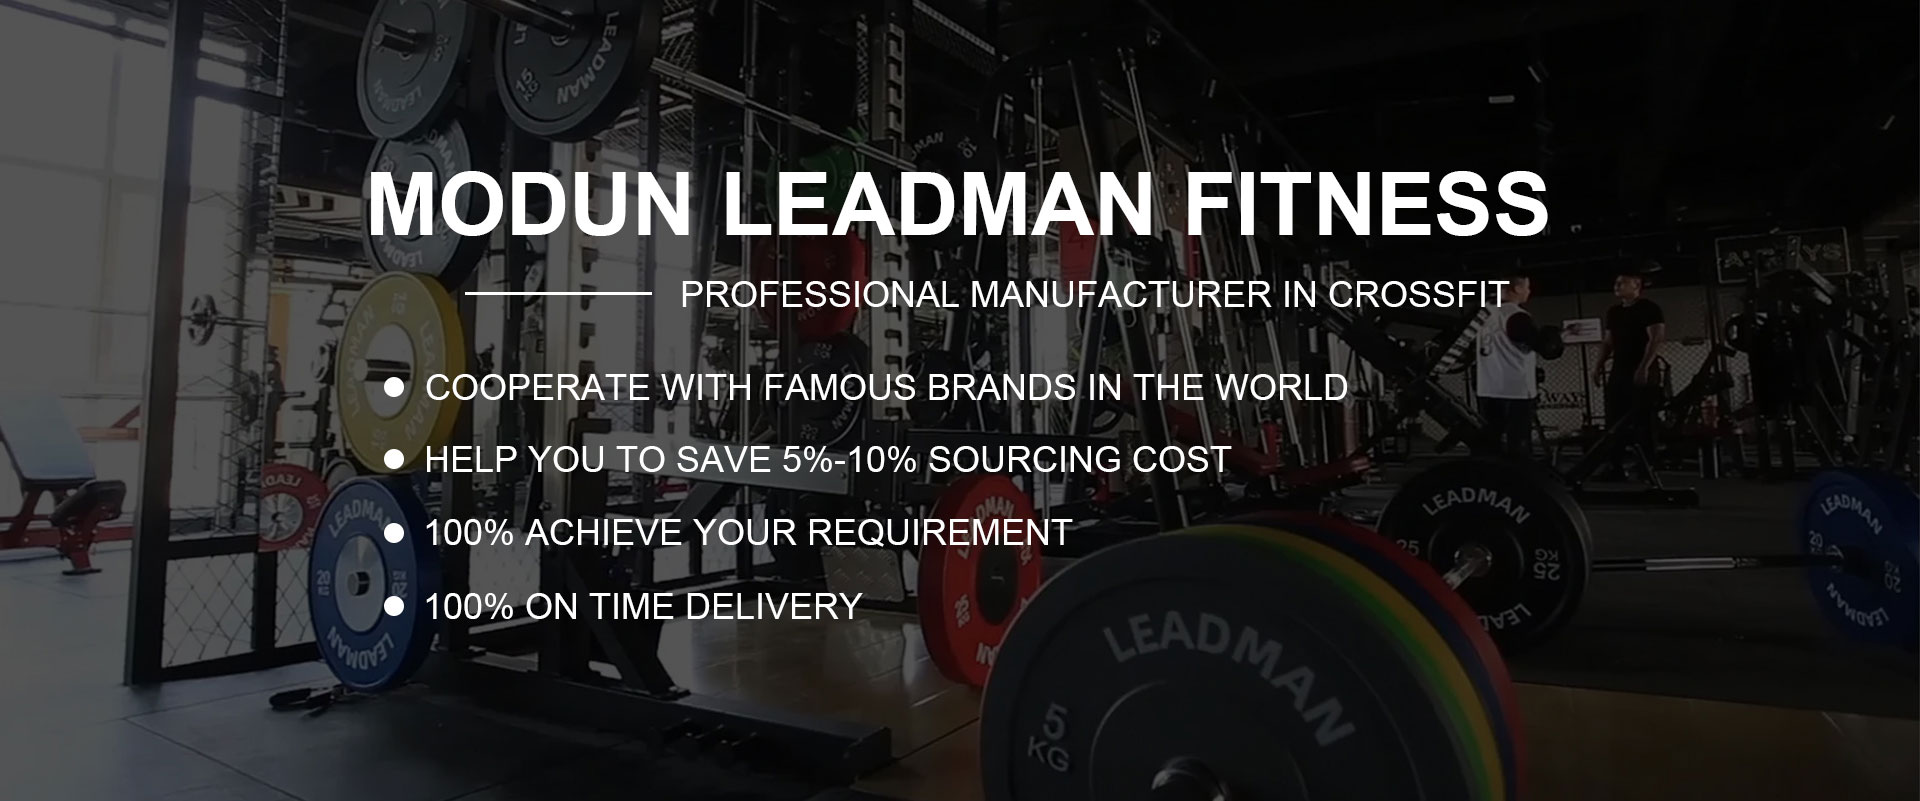 Gym Equipment Vendors|Modun Leadman Fitness